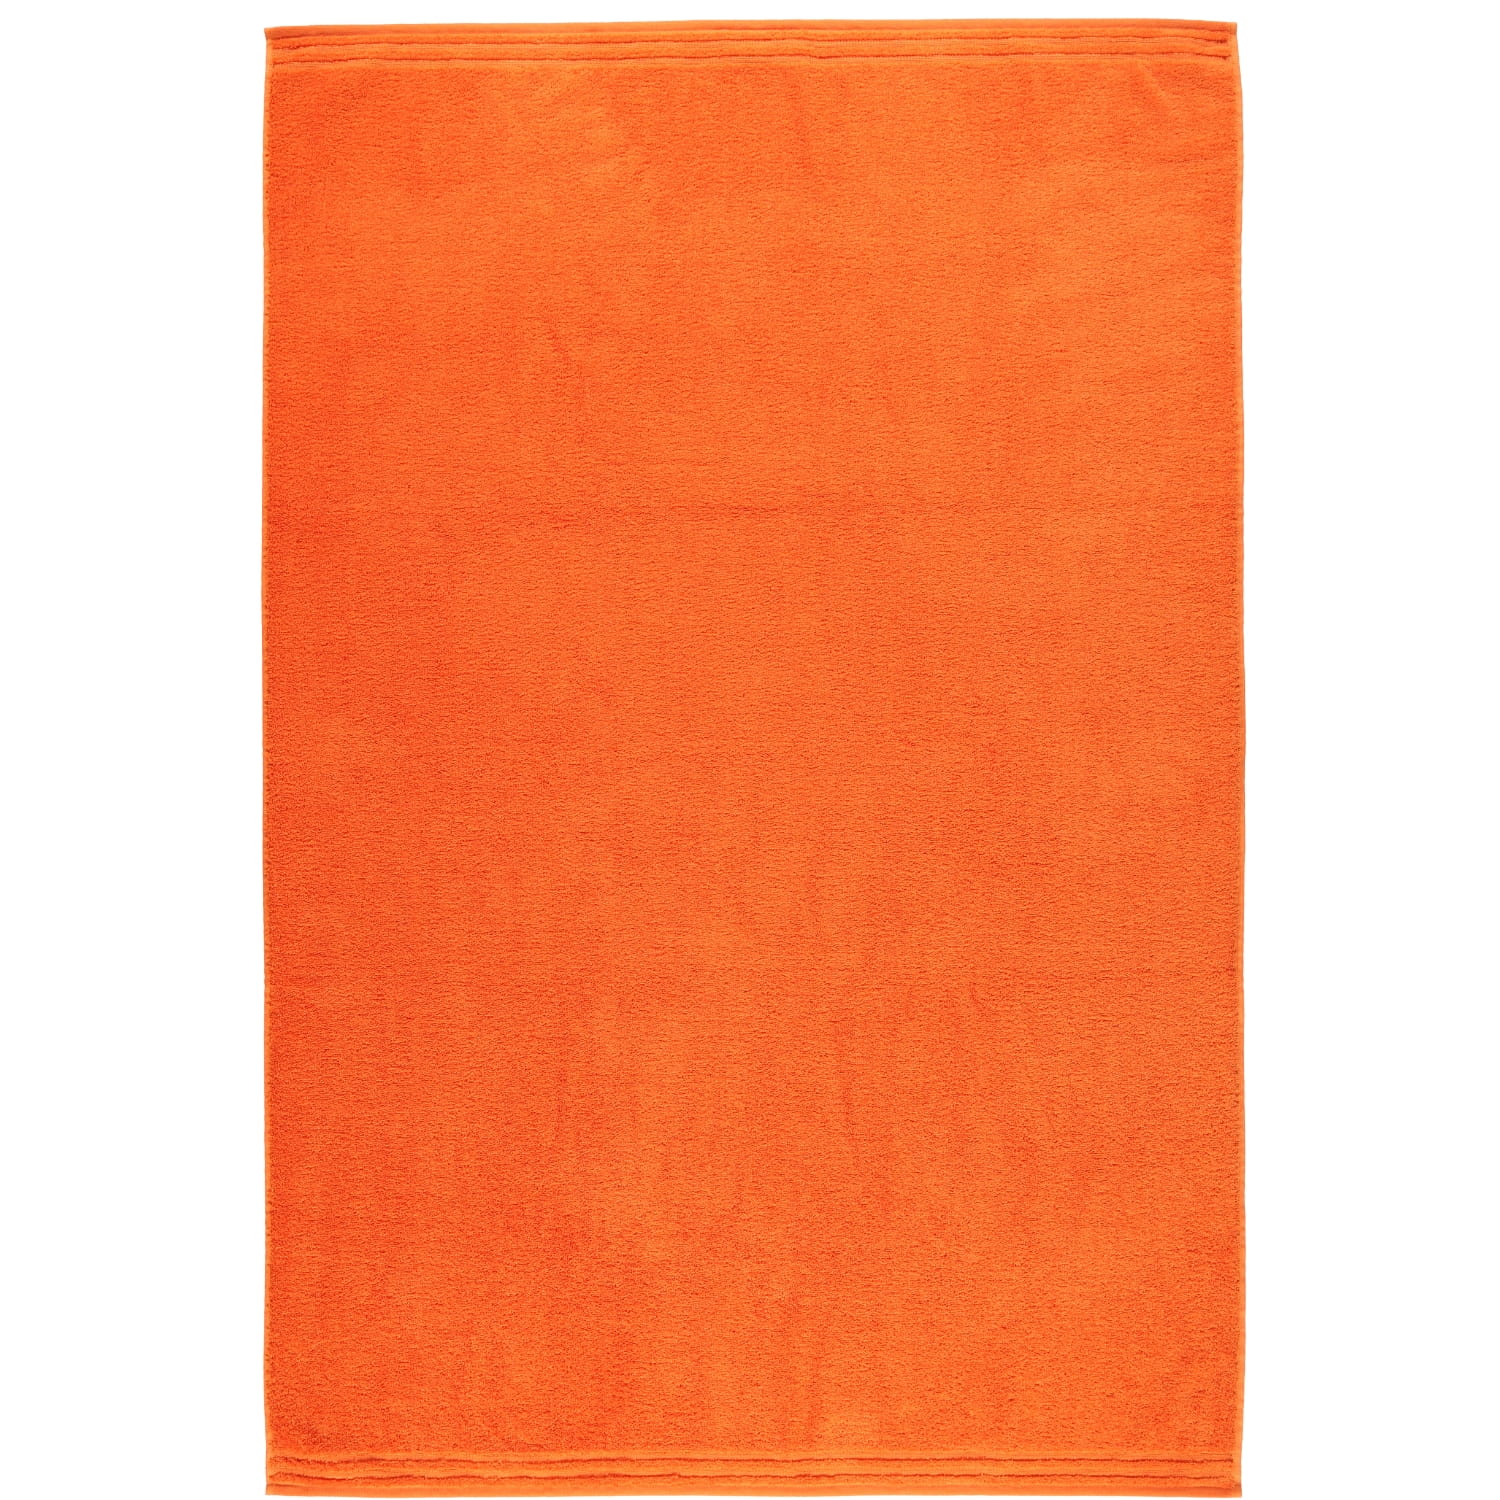 Feeling - | orange Calypso Vossen Farbe: - Vossen Handtücher 255 | Marken Vossen |